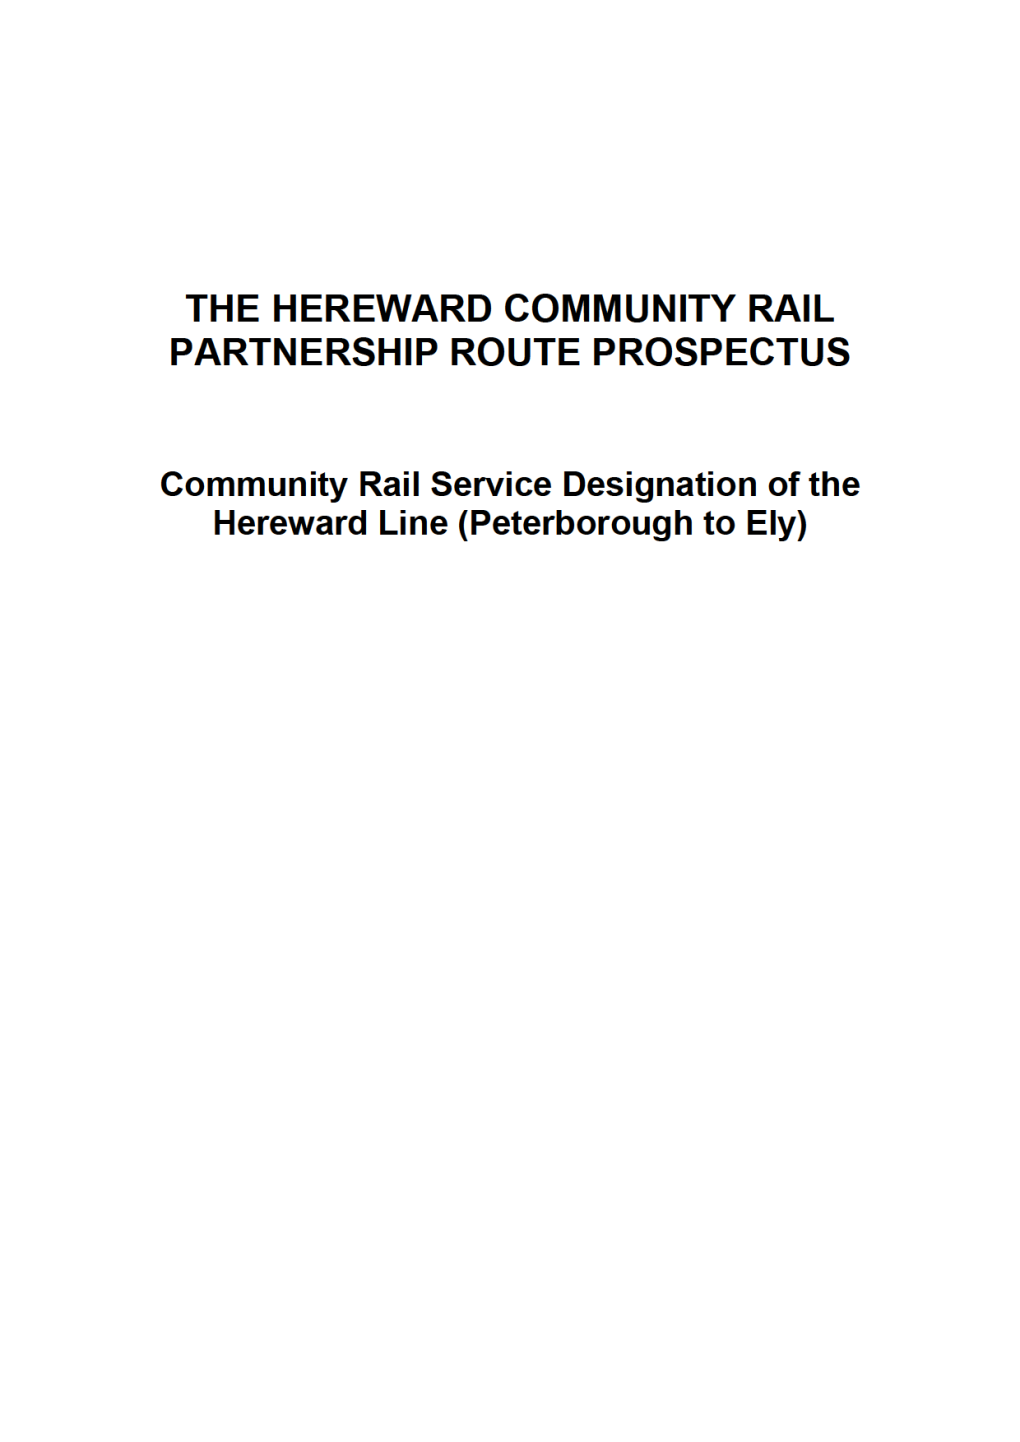 The Hereward Community Rail Partnership Route Prospectus